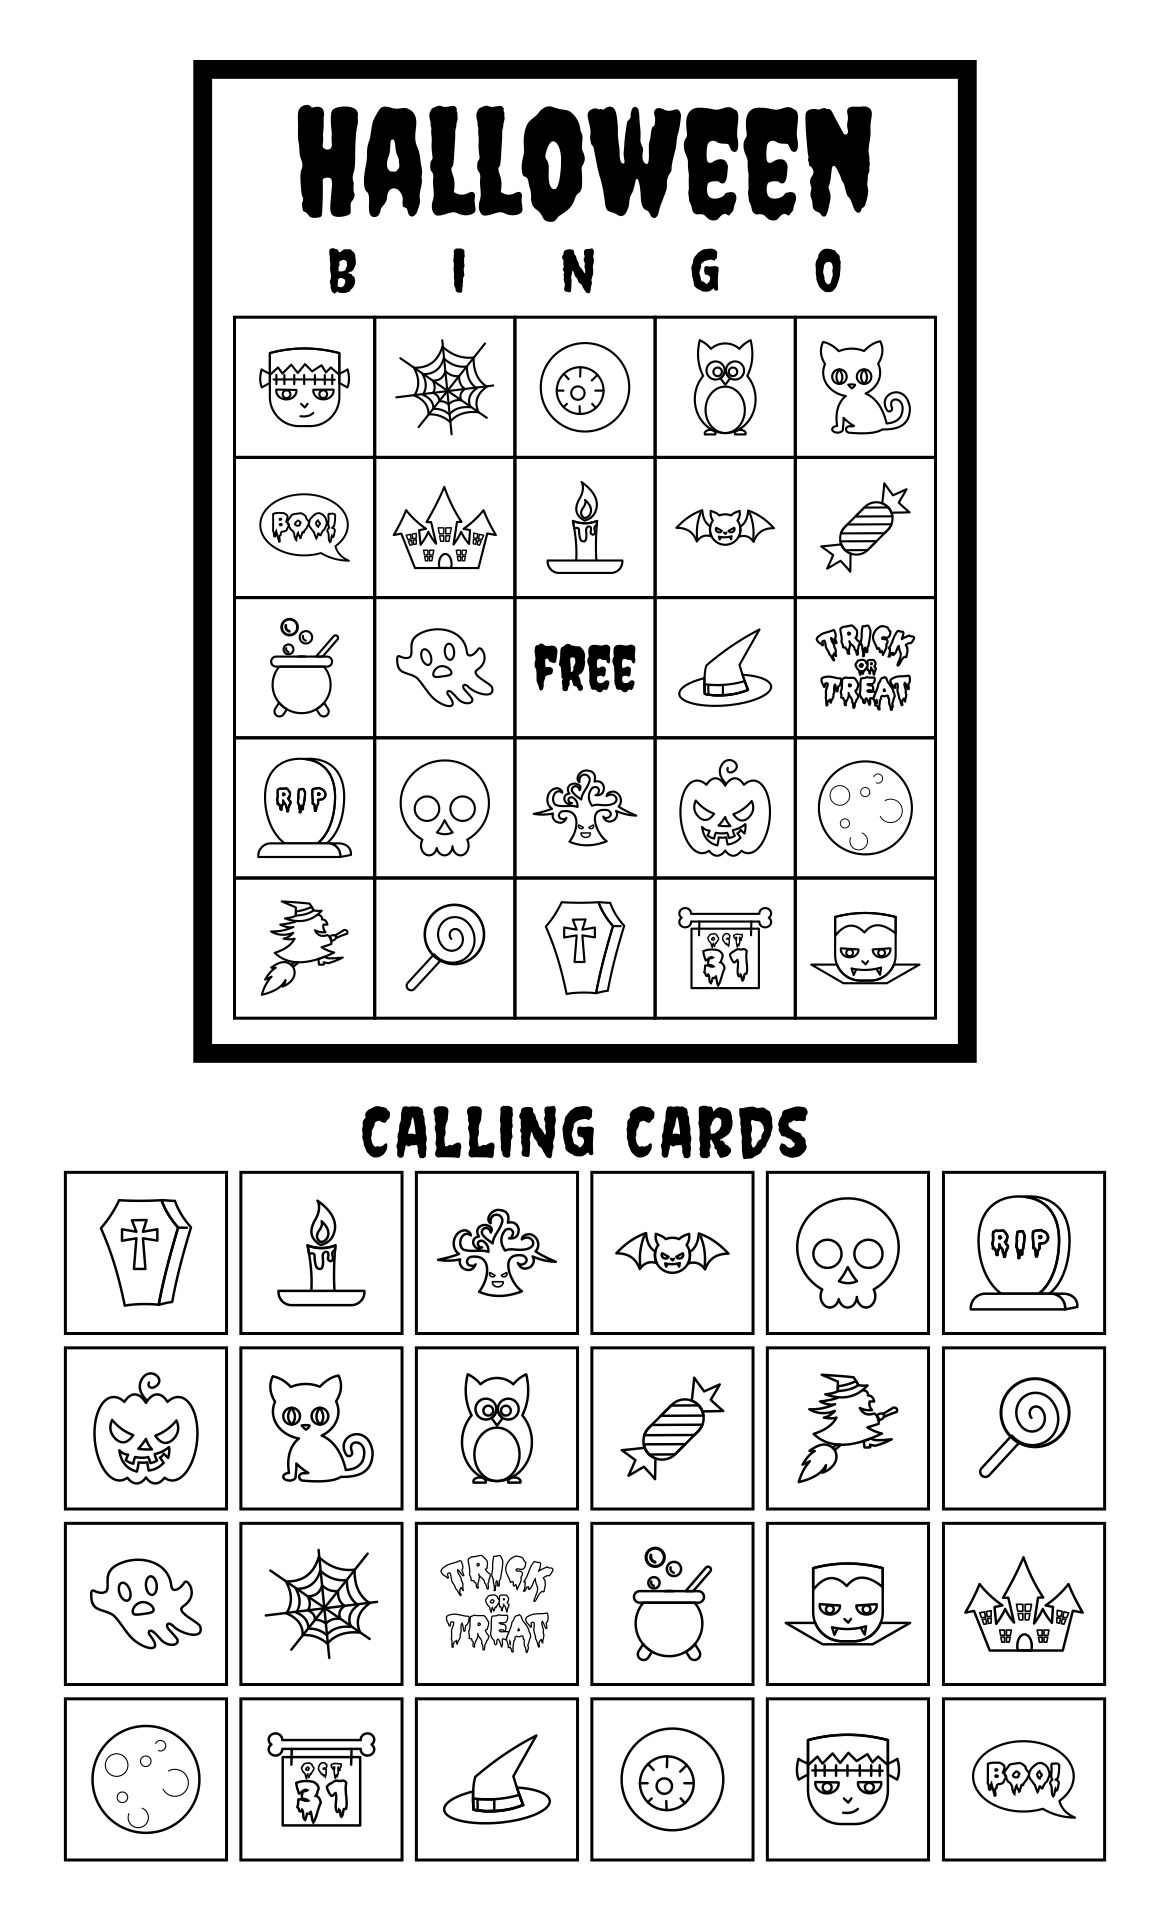 Printable Halloween Bingo Cards And Calling Cards